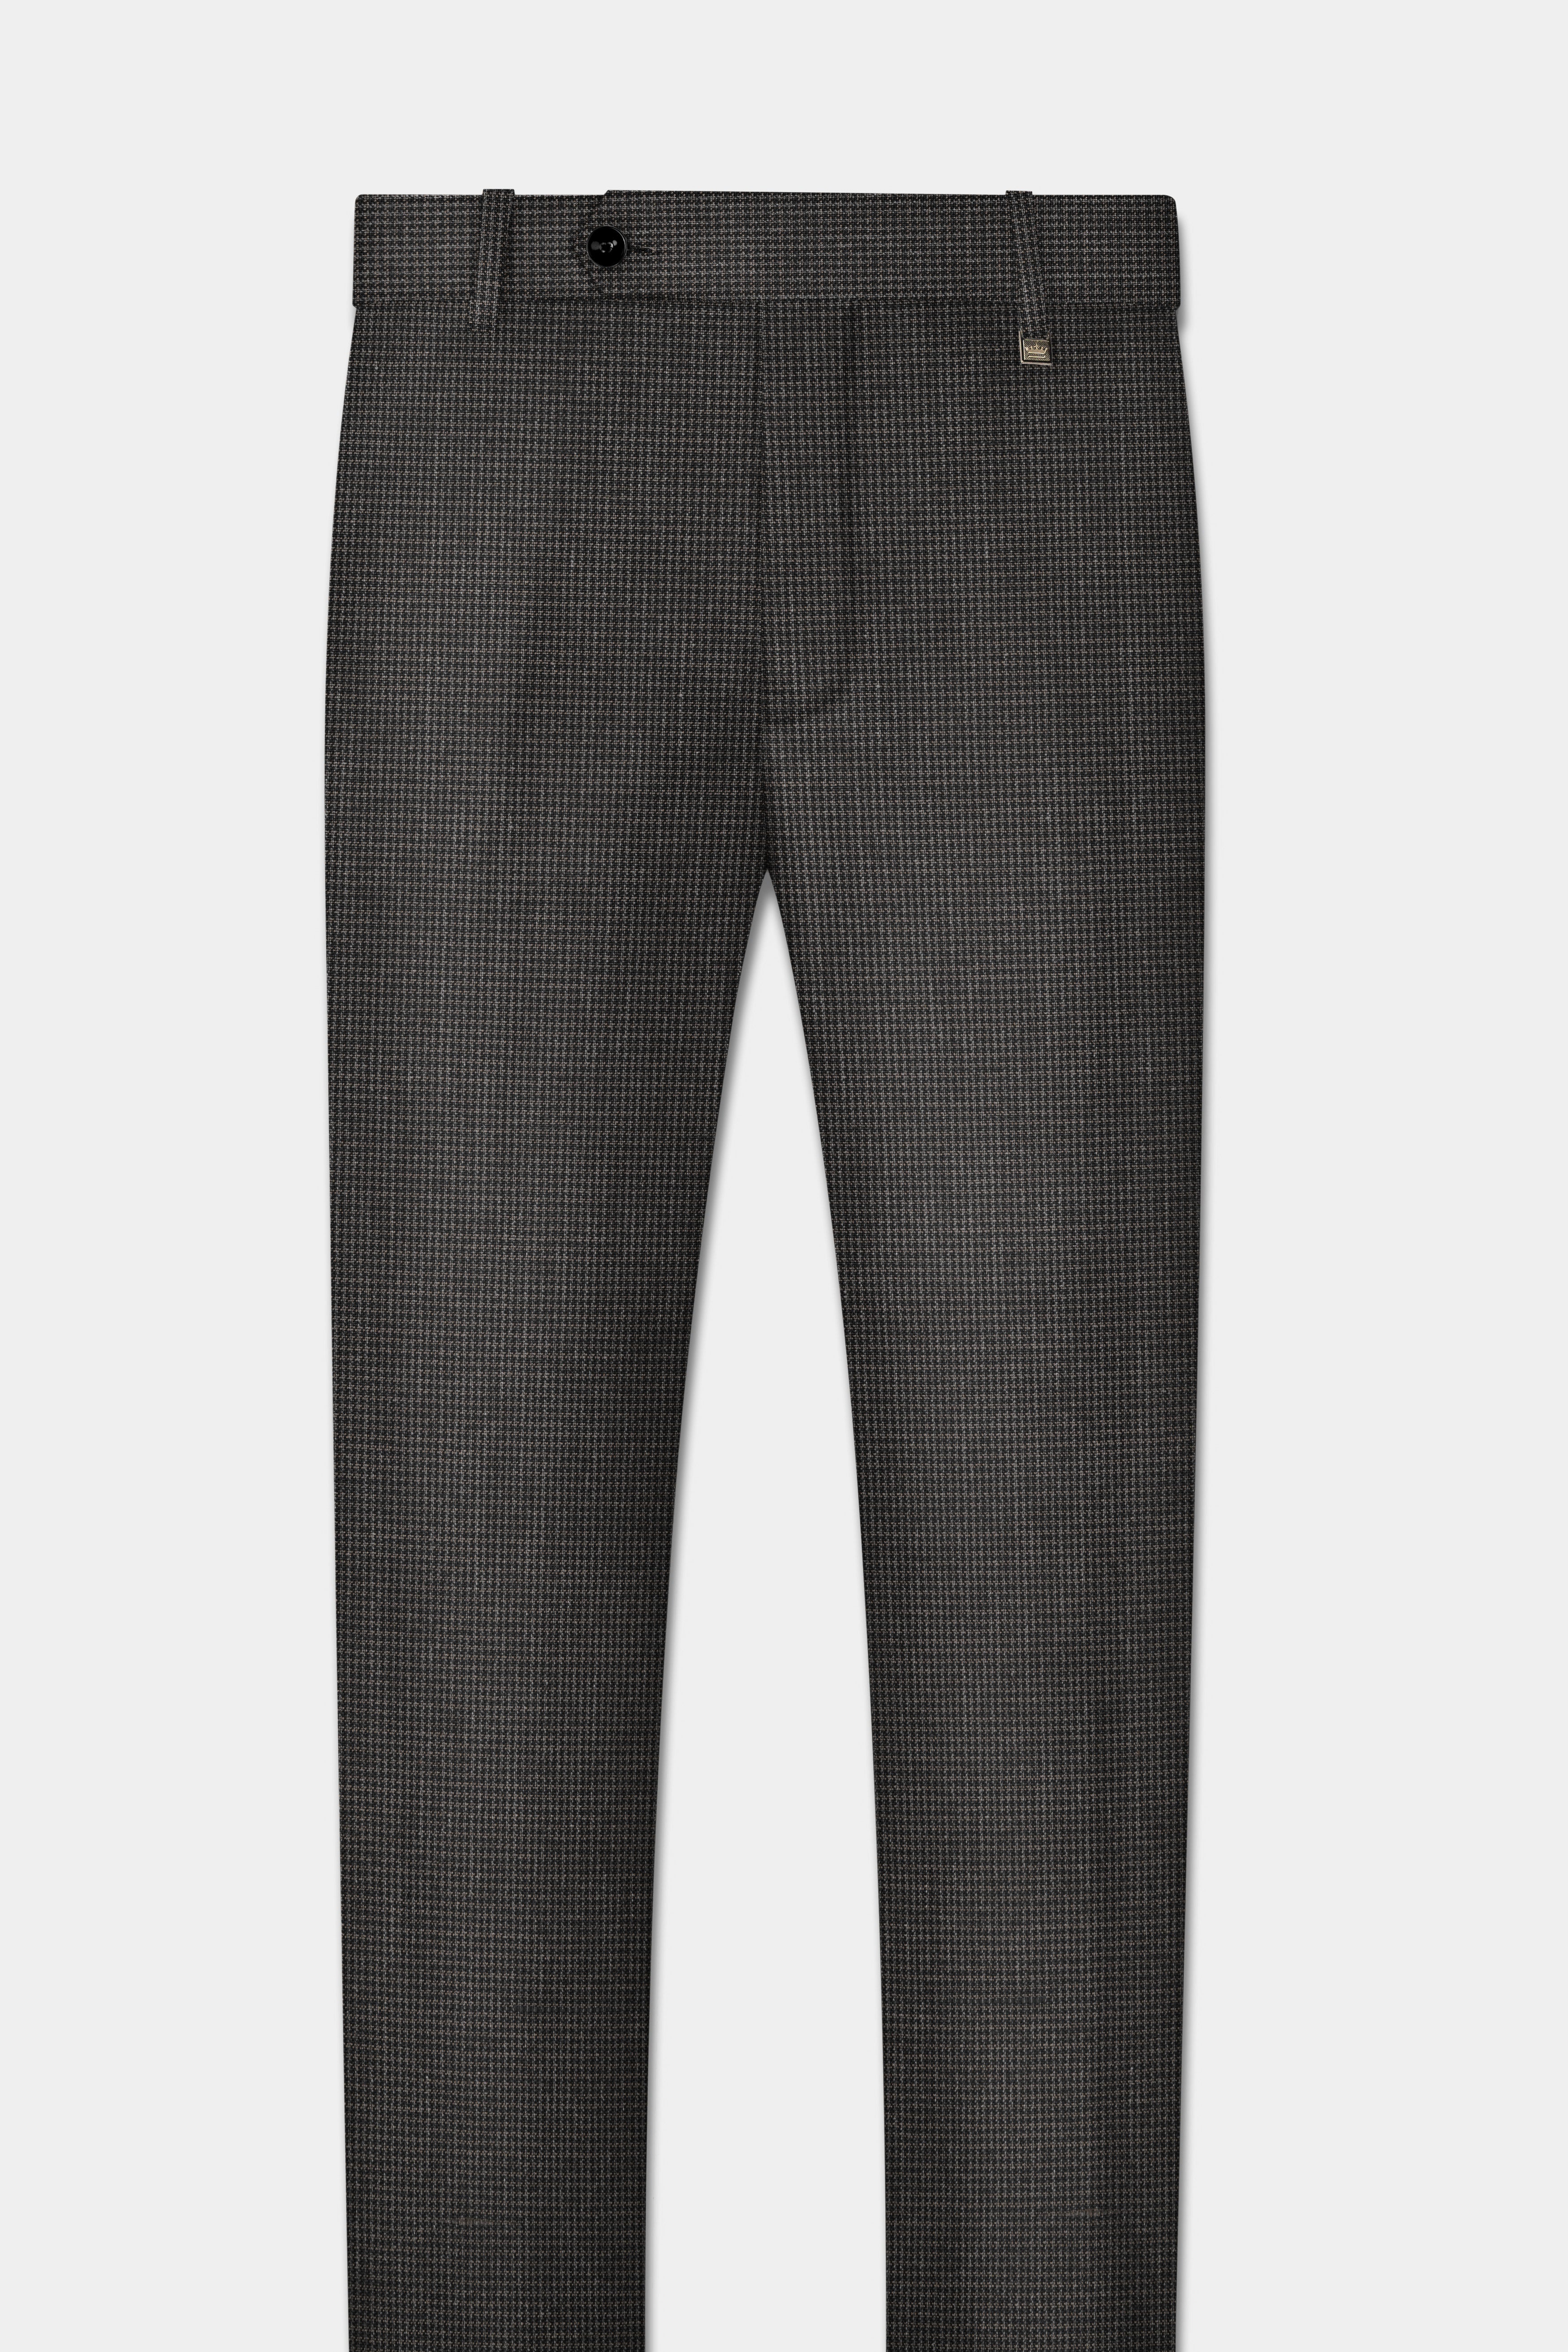 Iridium Brown Micro Checkered Wool Blend Pant